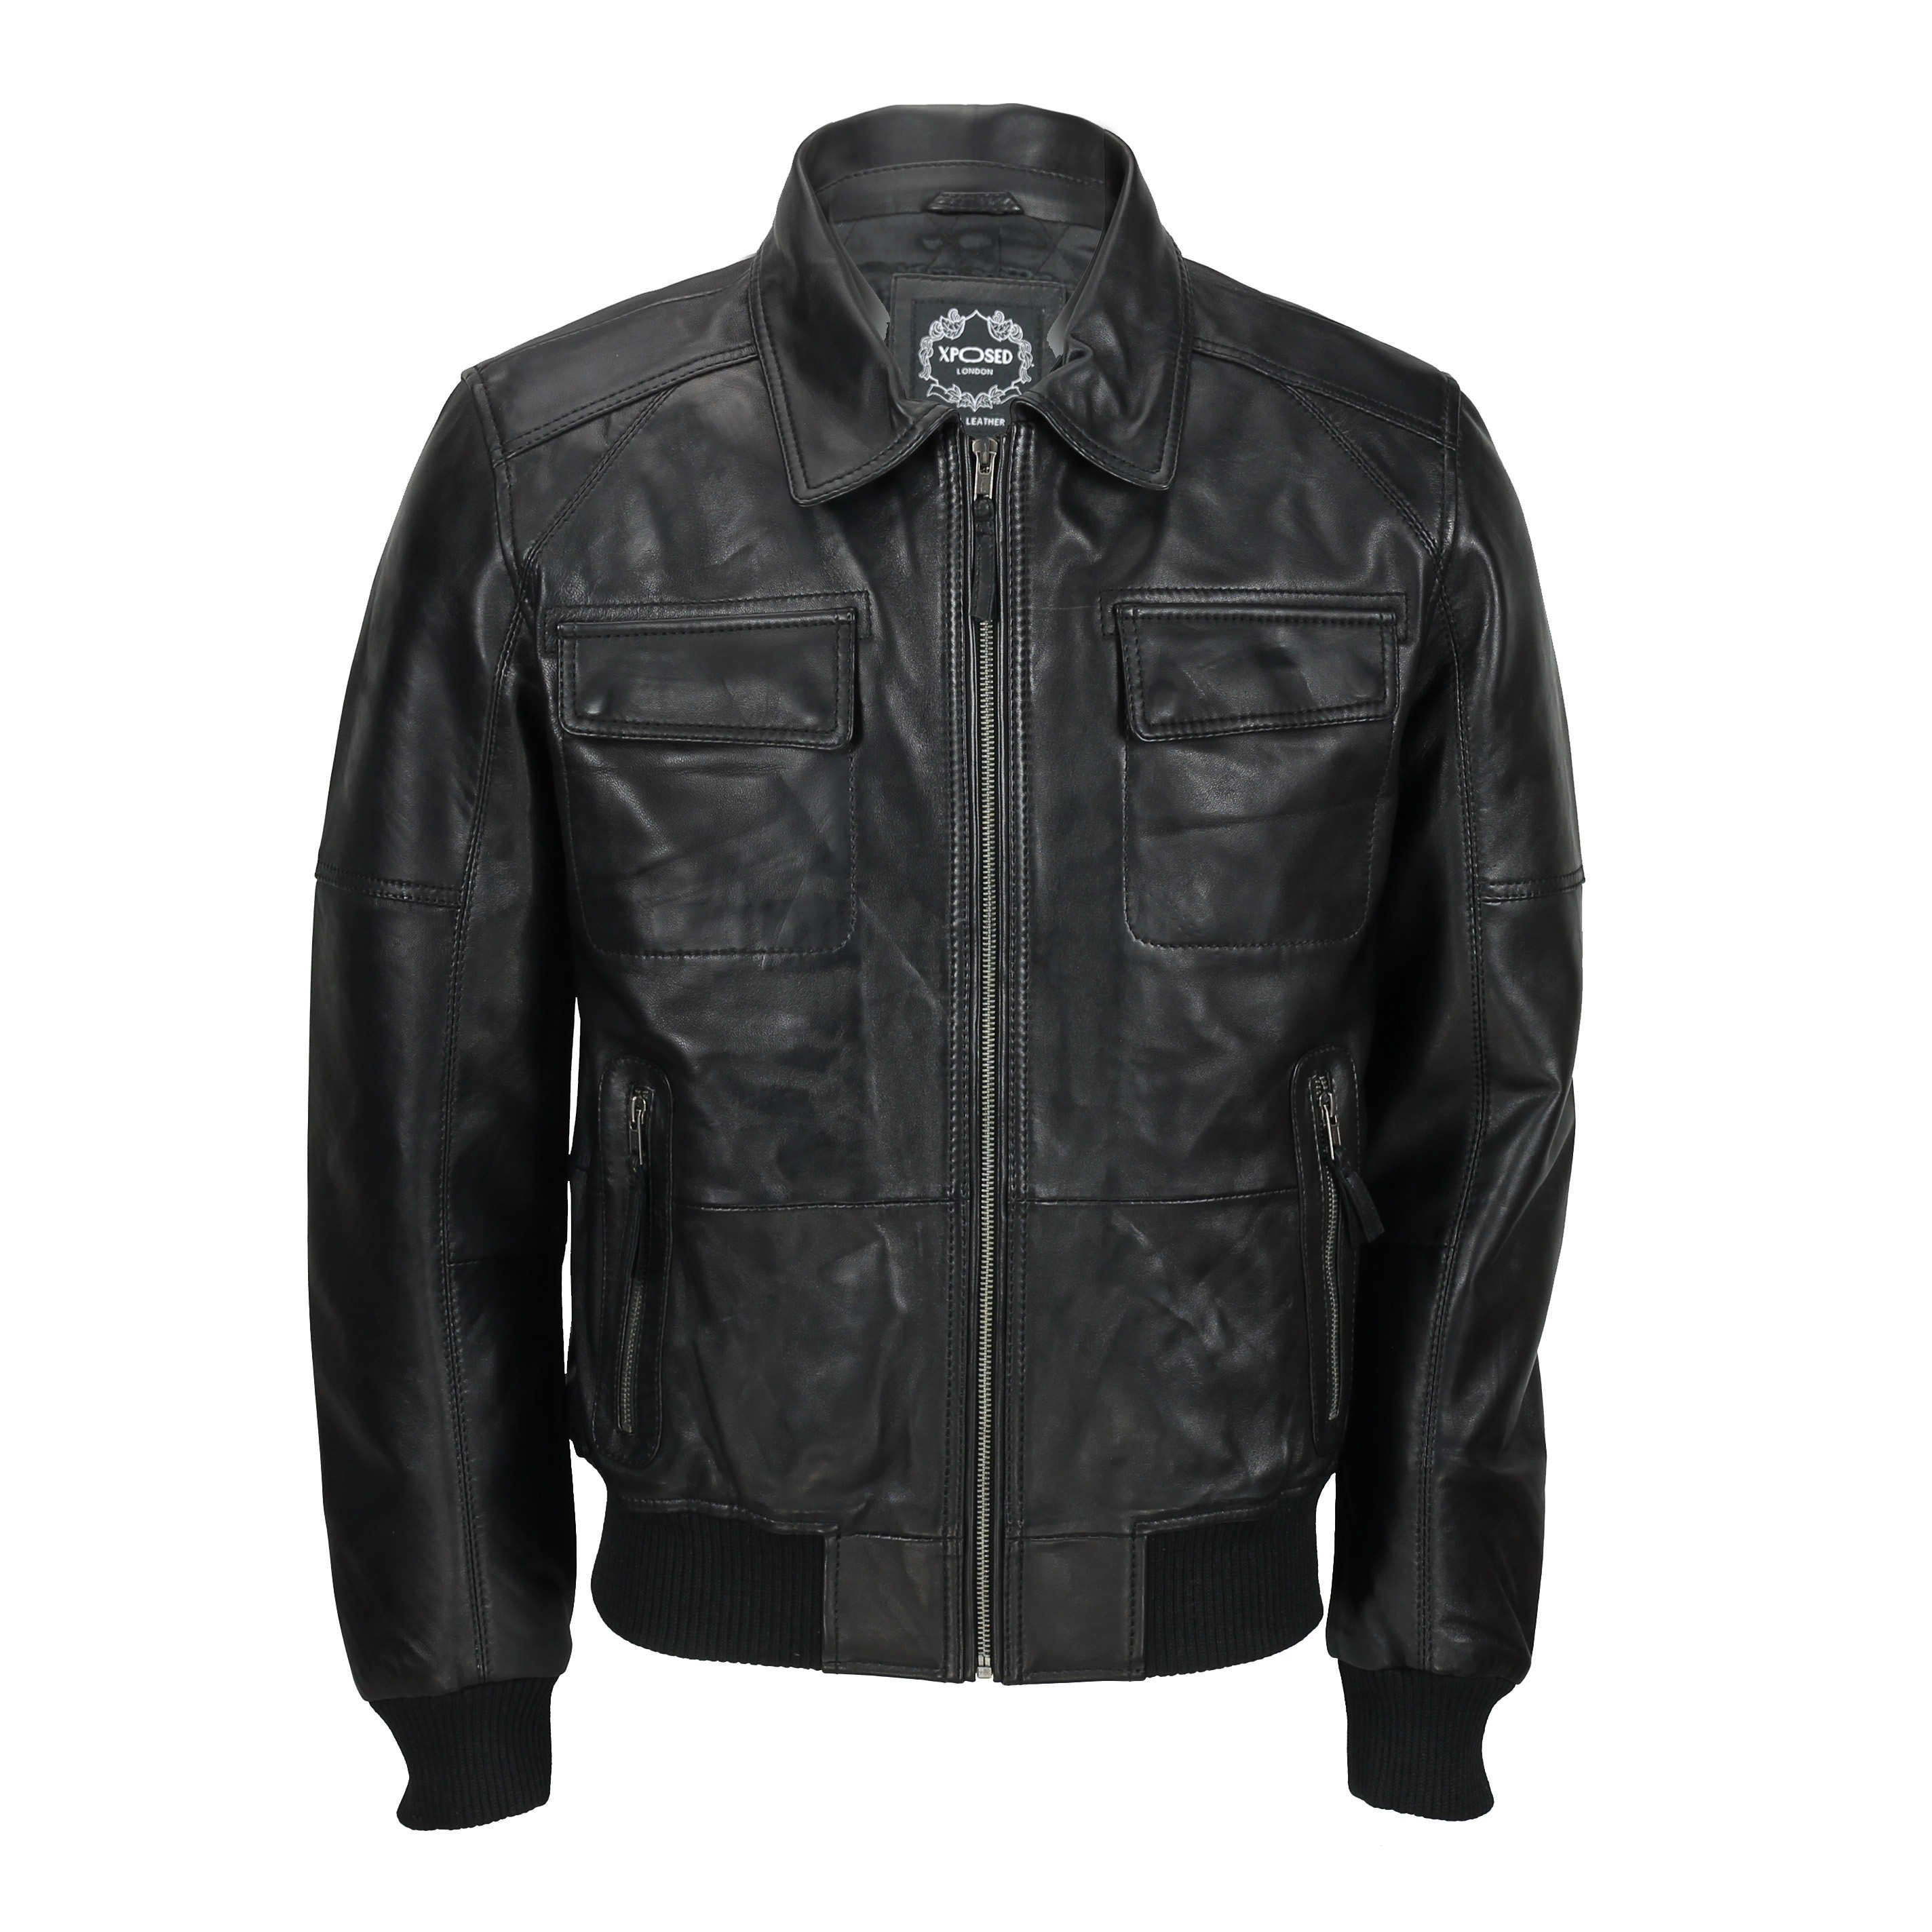 Mens Real Leather Vintage Bomber Pilot Jacket Fur Collar Retro Biker Style Black Ebay 